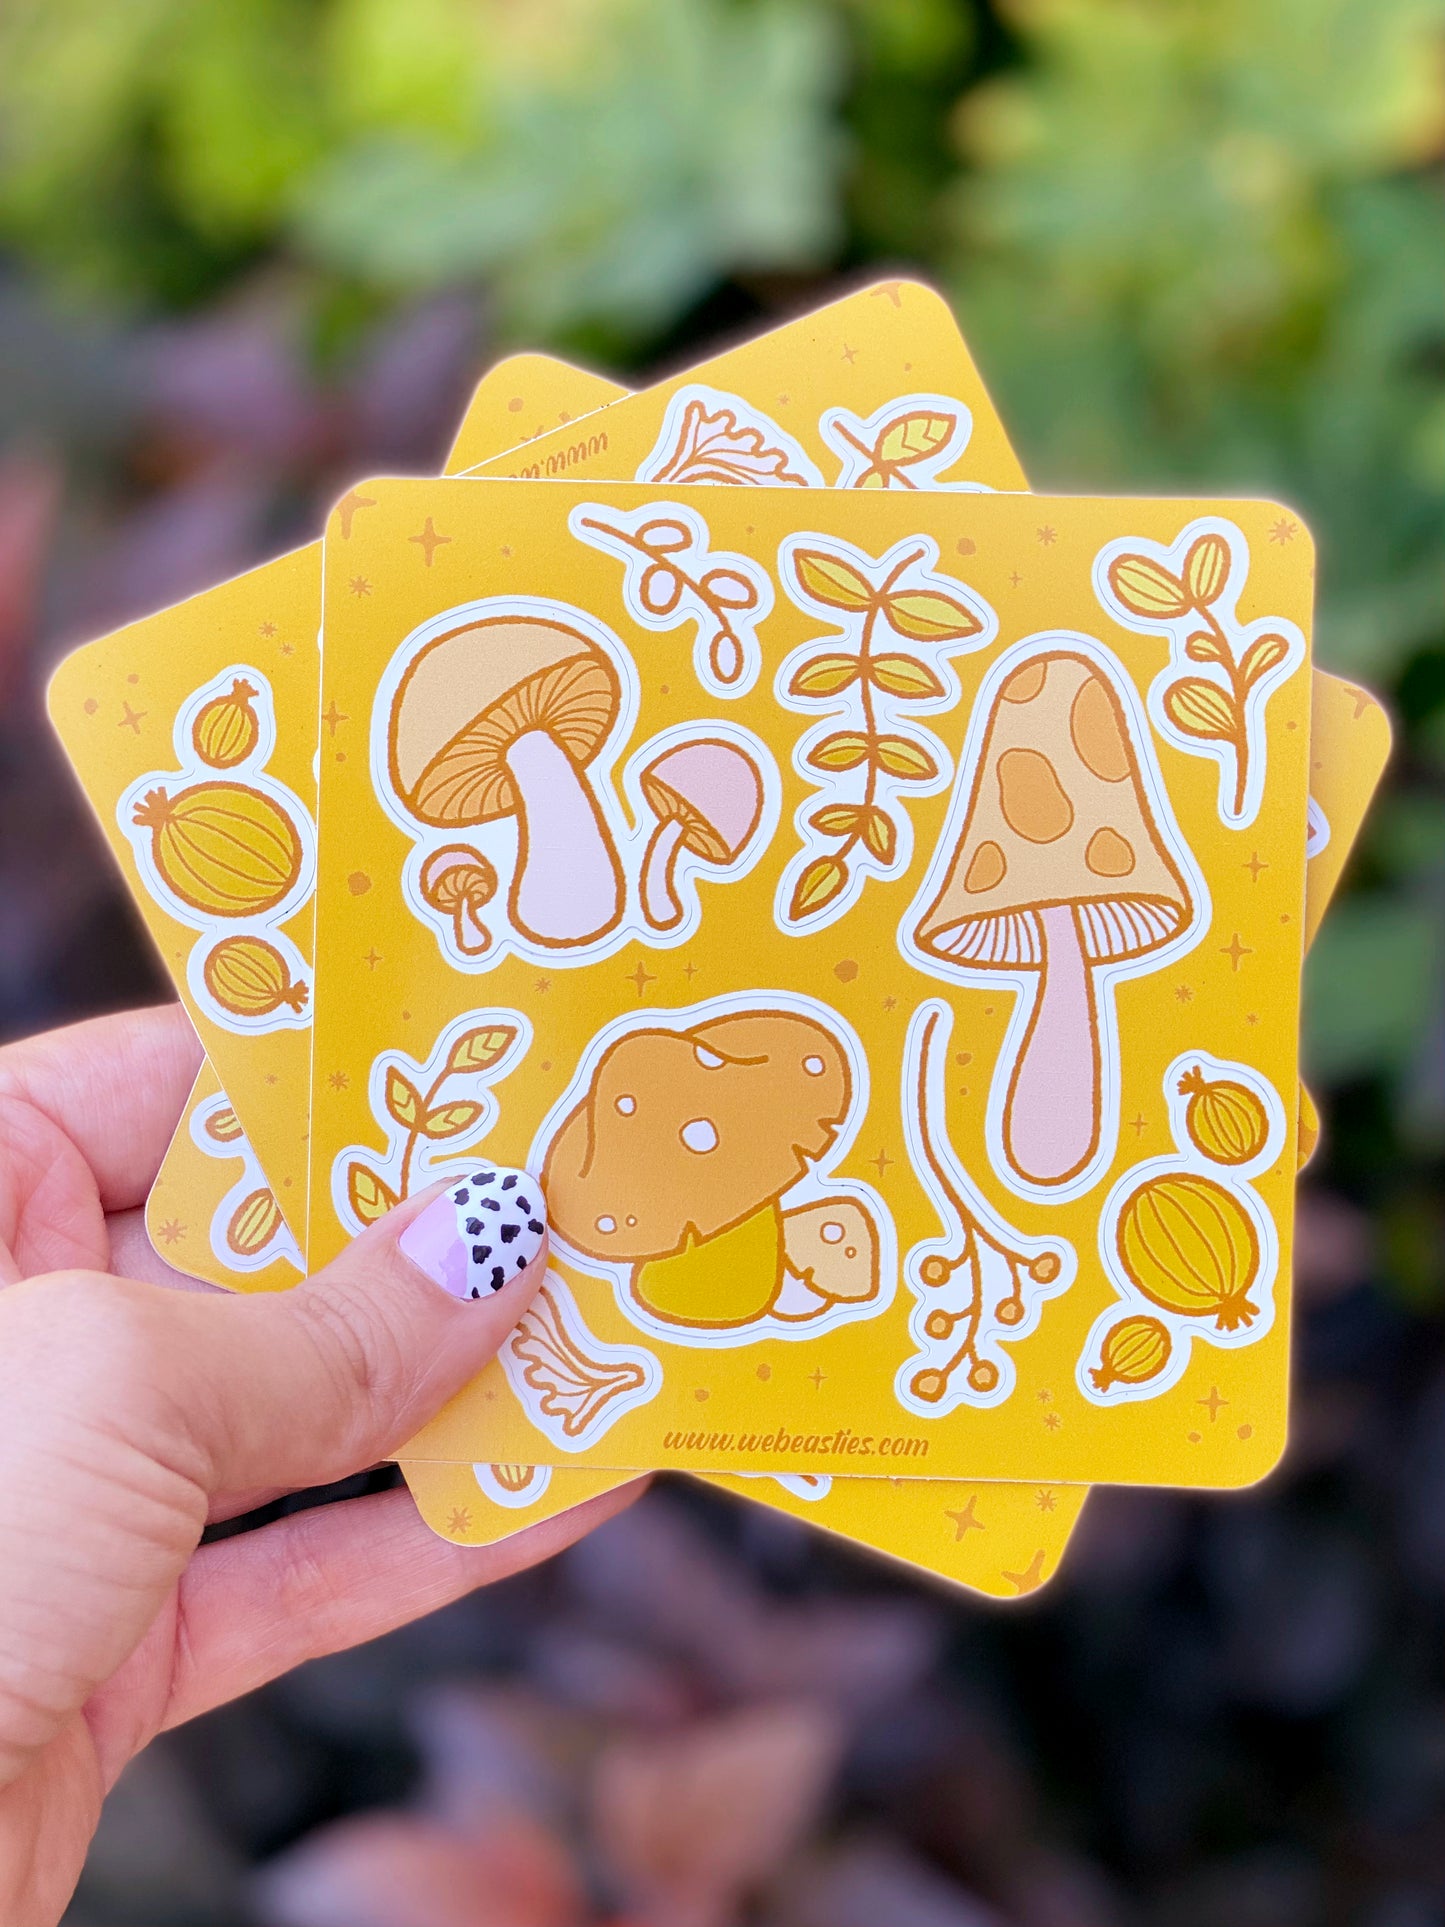 Yellow Mushrooms and Plants Autumn Vibes Sticker Sheet